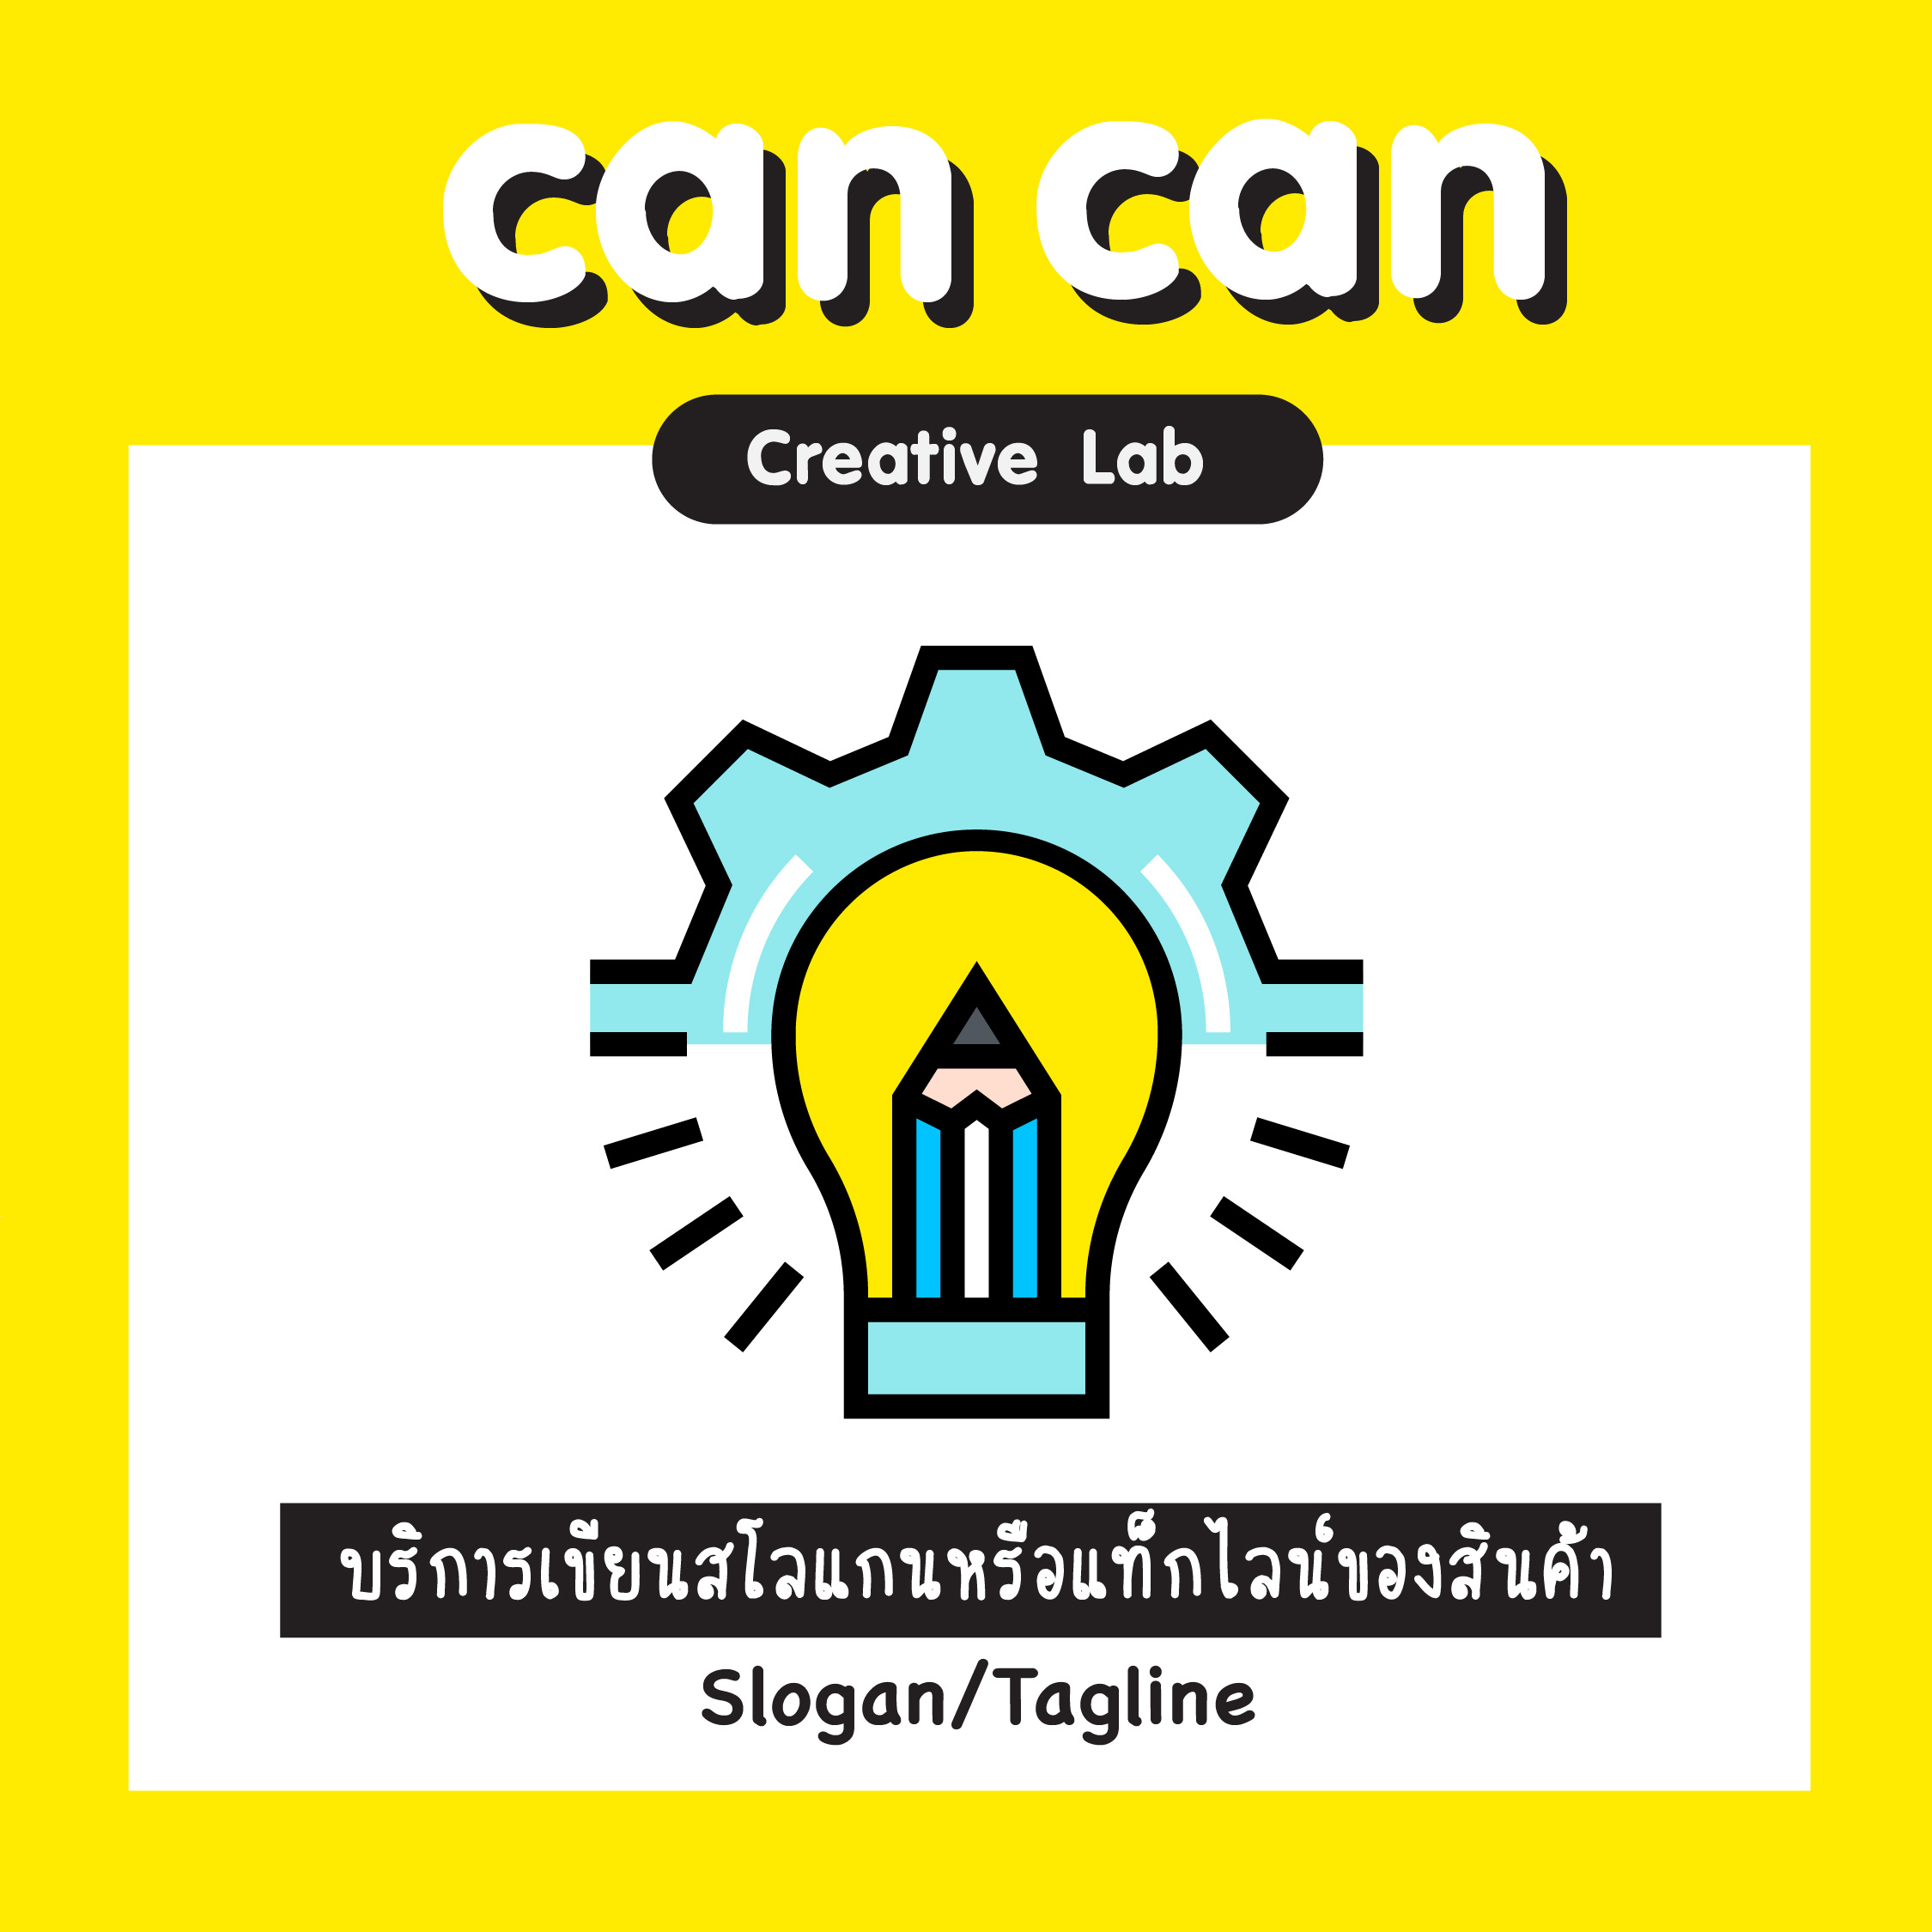 CanCan Creative Lab - บริการคิดสโลแกนหรือแท็กไลน์สินค้า  (Slogan/Tagline) ราคาพิเศษ  (จัดส่งทางอีเมล)